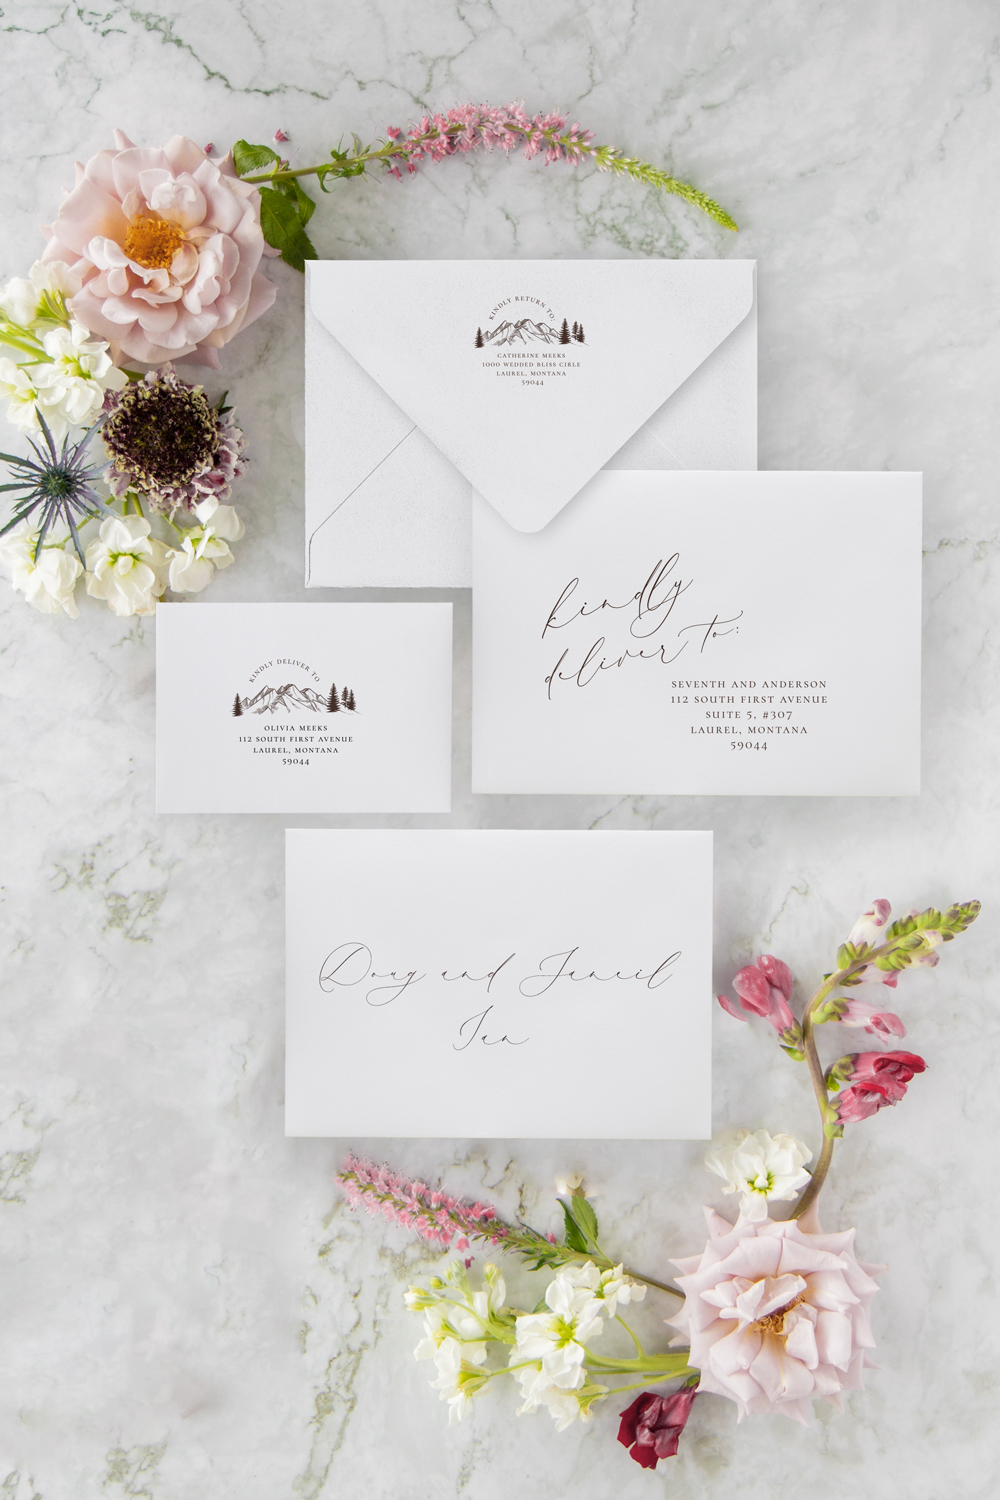 mountain-montana-wedding-envelope-addressing-invitations-seventhandanderson